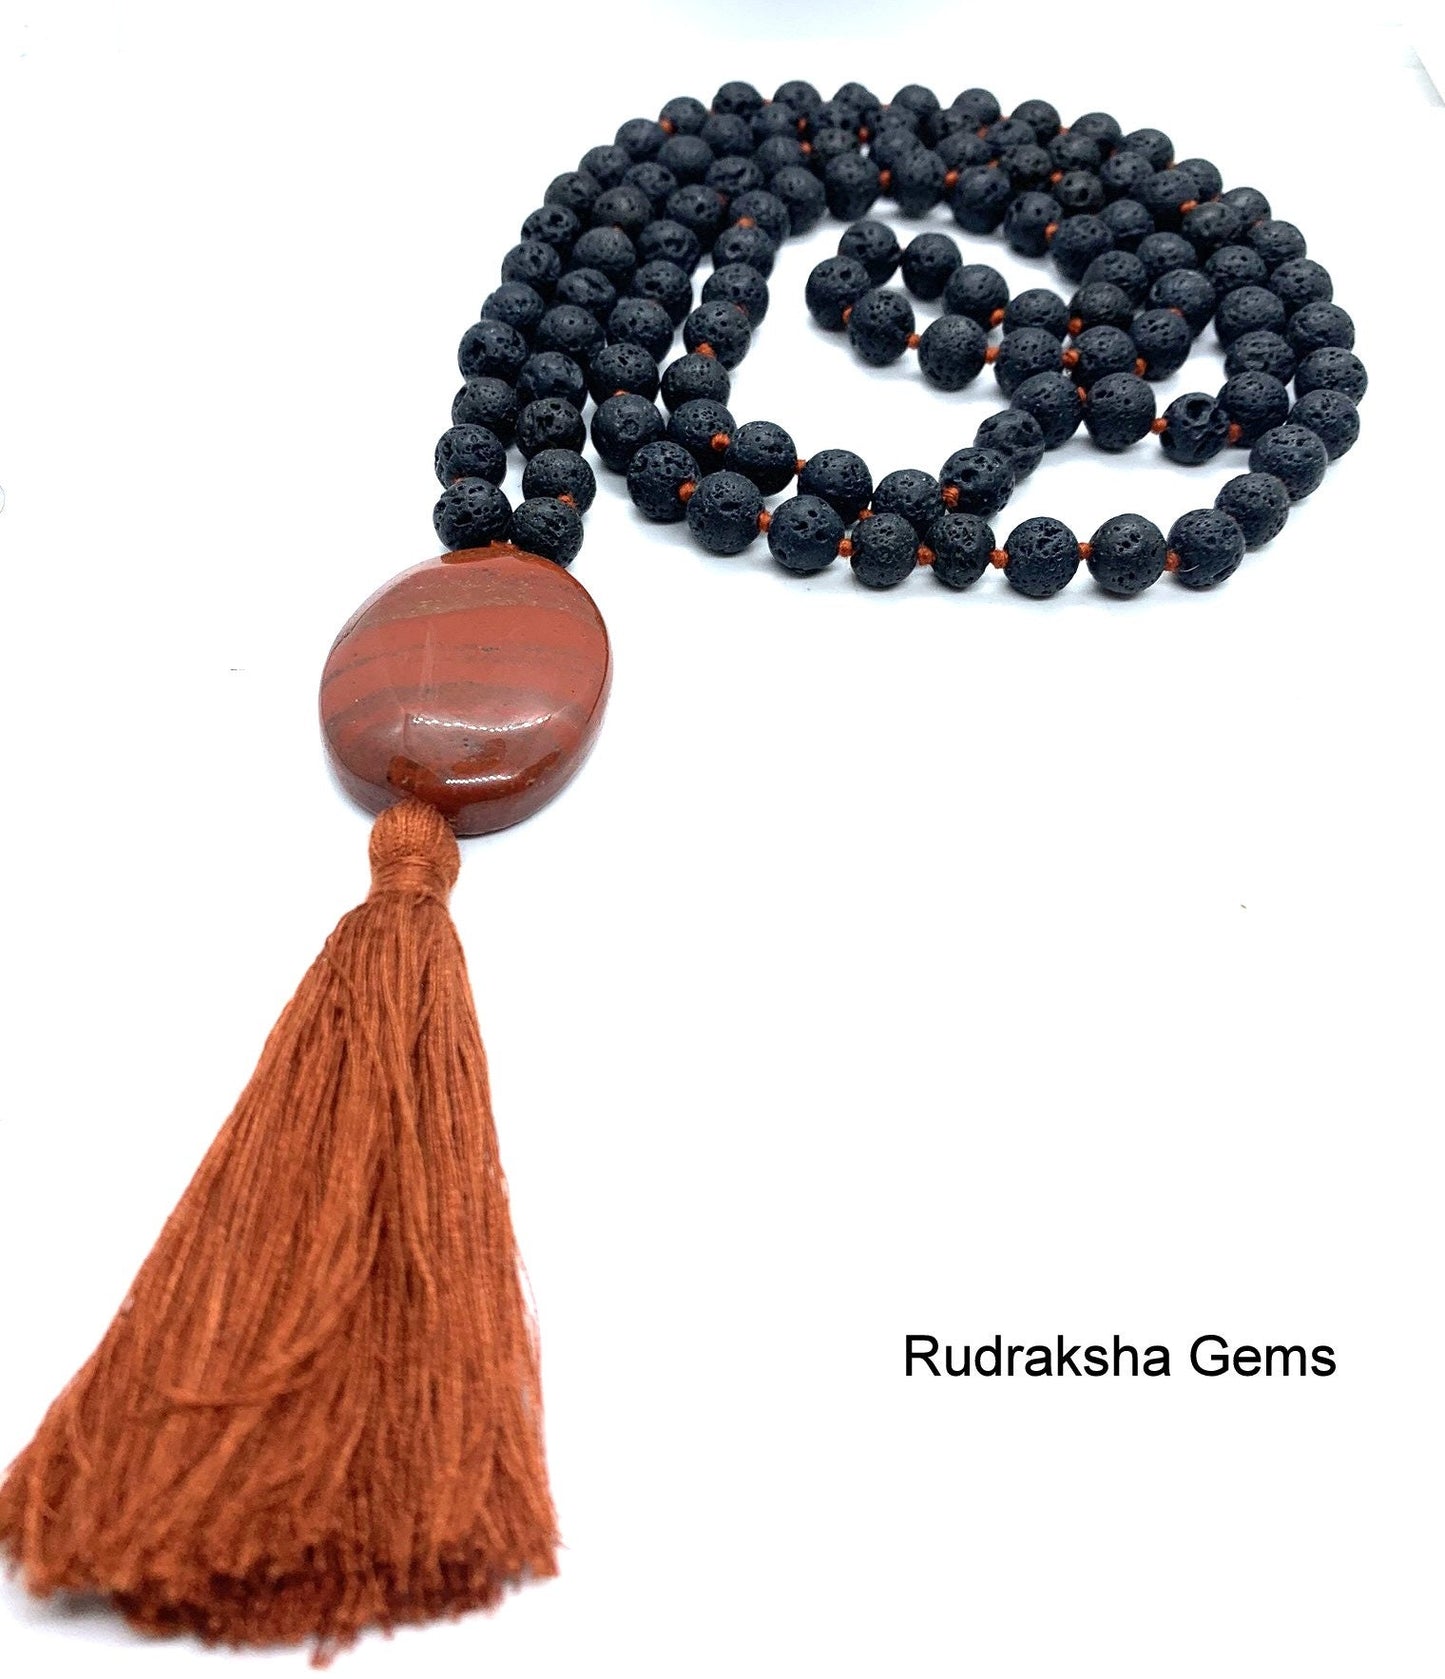 Pure Strength Lava Rock Black, Red Tassel Hand knotted Mala Necklace, Red Jasper Guru bead, Meditation and Yoga Mala, Buddhist Prayer Beads